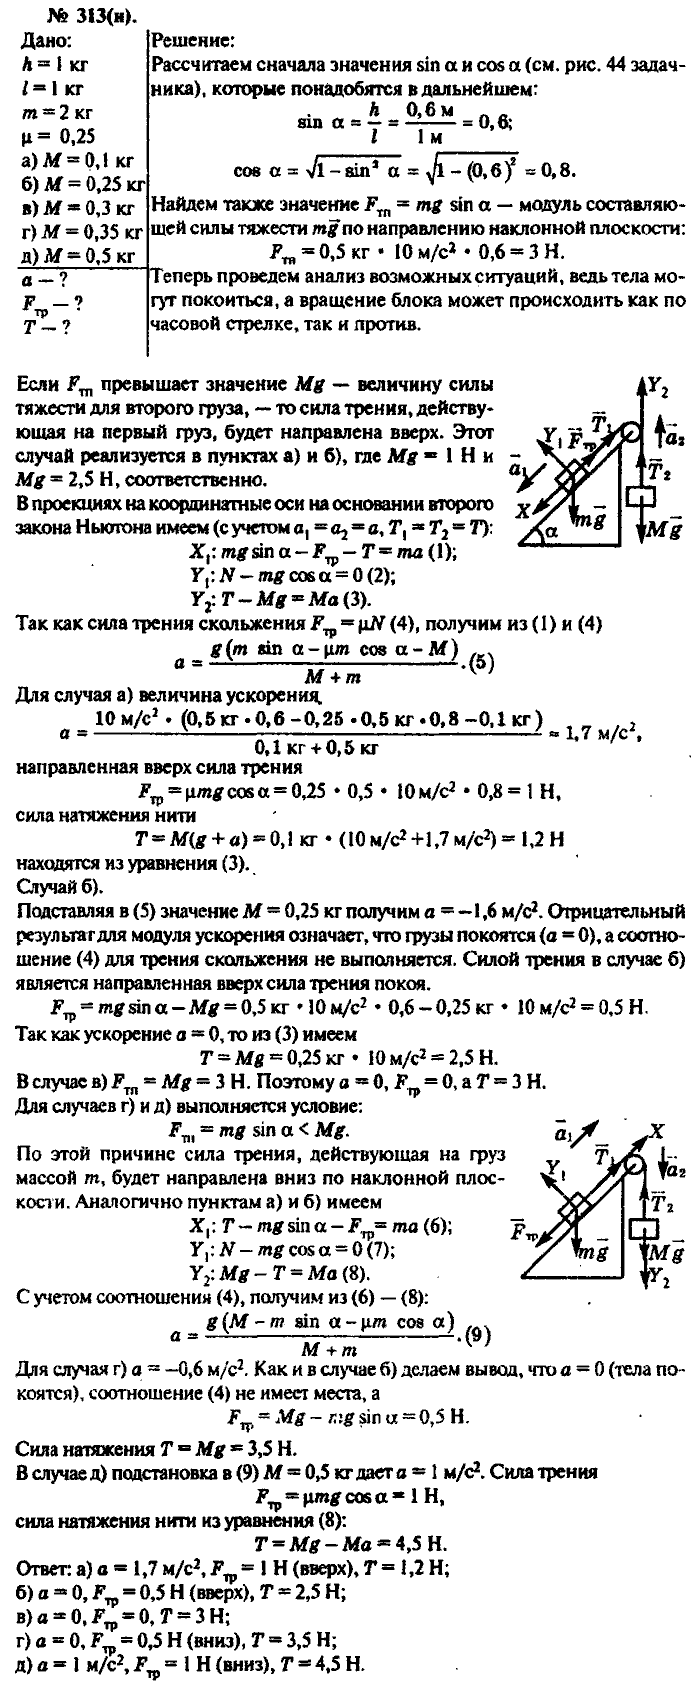 Физика, 10 класс, Рымкевич, 2001-2012, задача: 313(н)